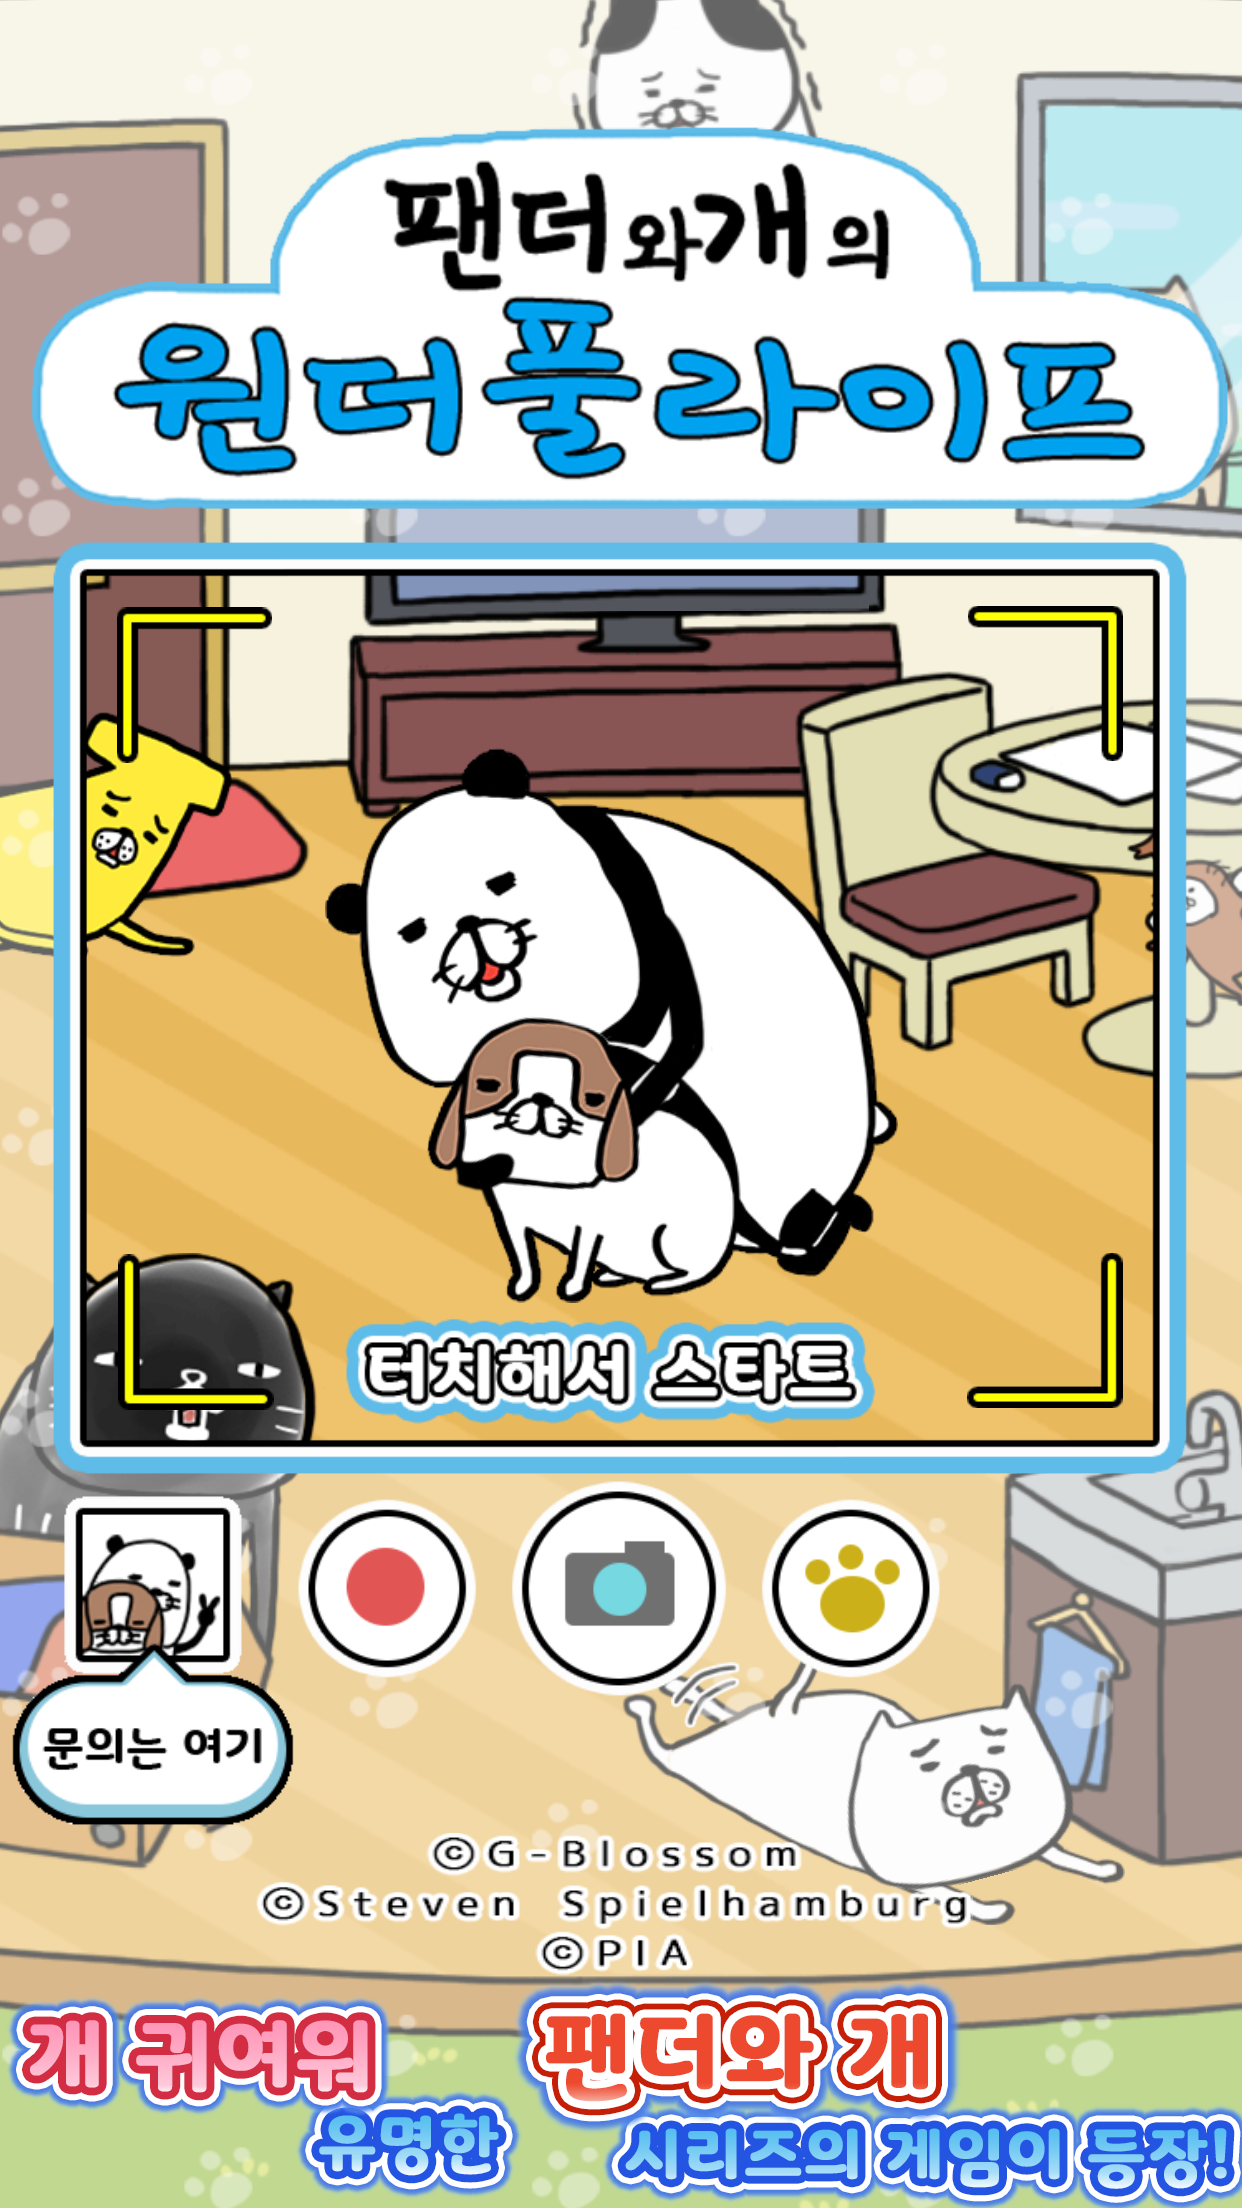 Screenshot 1 of Panda နှင့် Dog တို့၏ အံ့သြဖွယ်ဘဝ 1.0.0